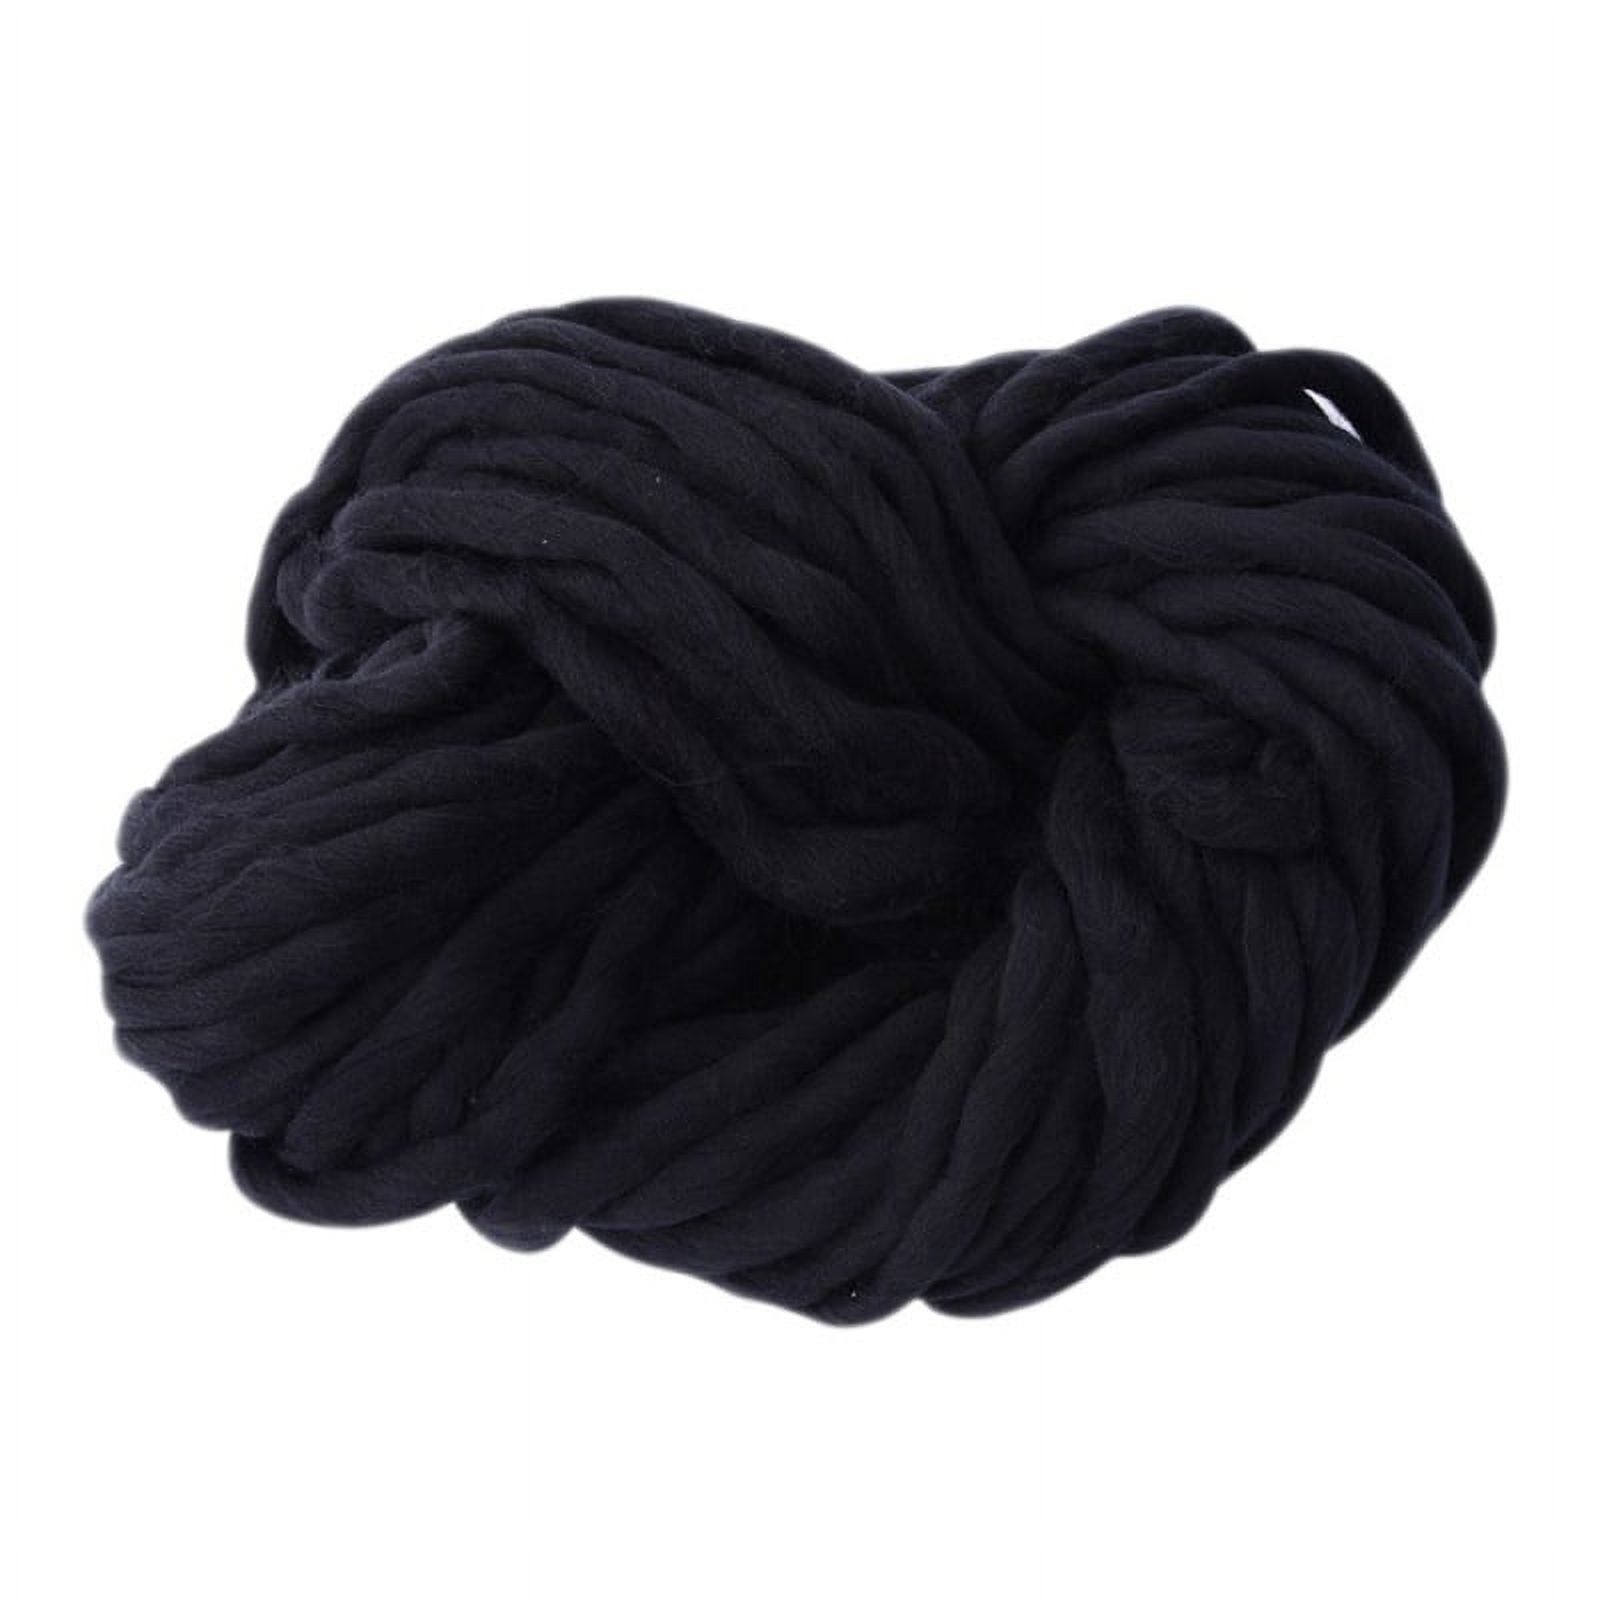 100% Non-Mulesed Chunky Wool Yarn Big Chunky Yarn Massive Yarn Extreme Arm  Knitting Giant Chunky Knit Blankets Throws (250g-0.6lbs, Black)